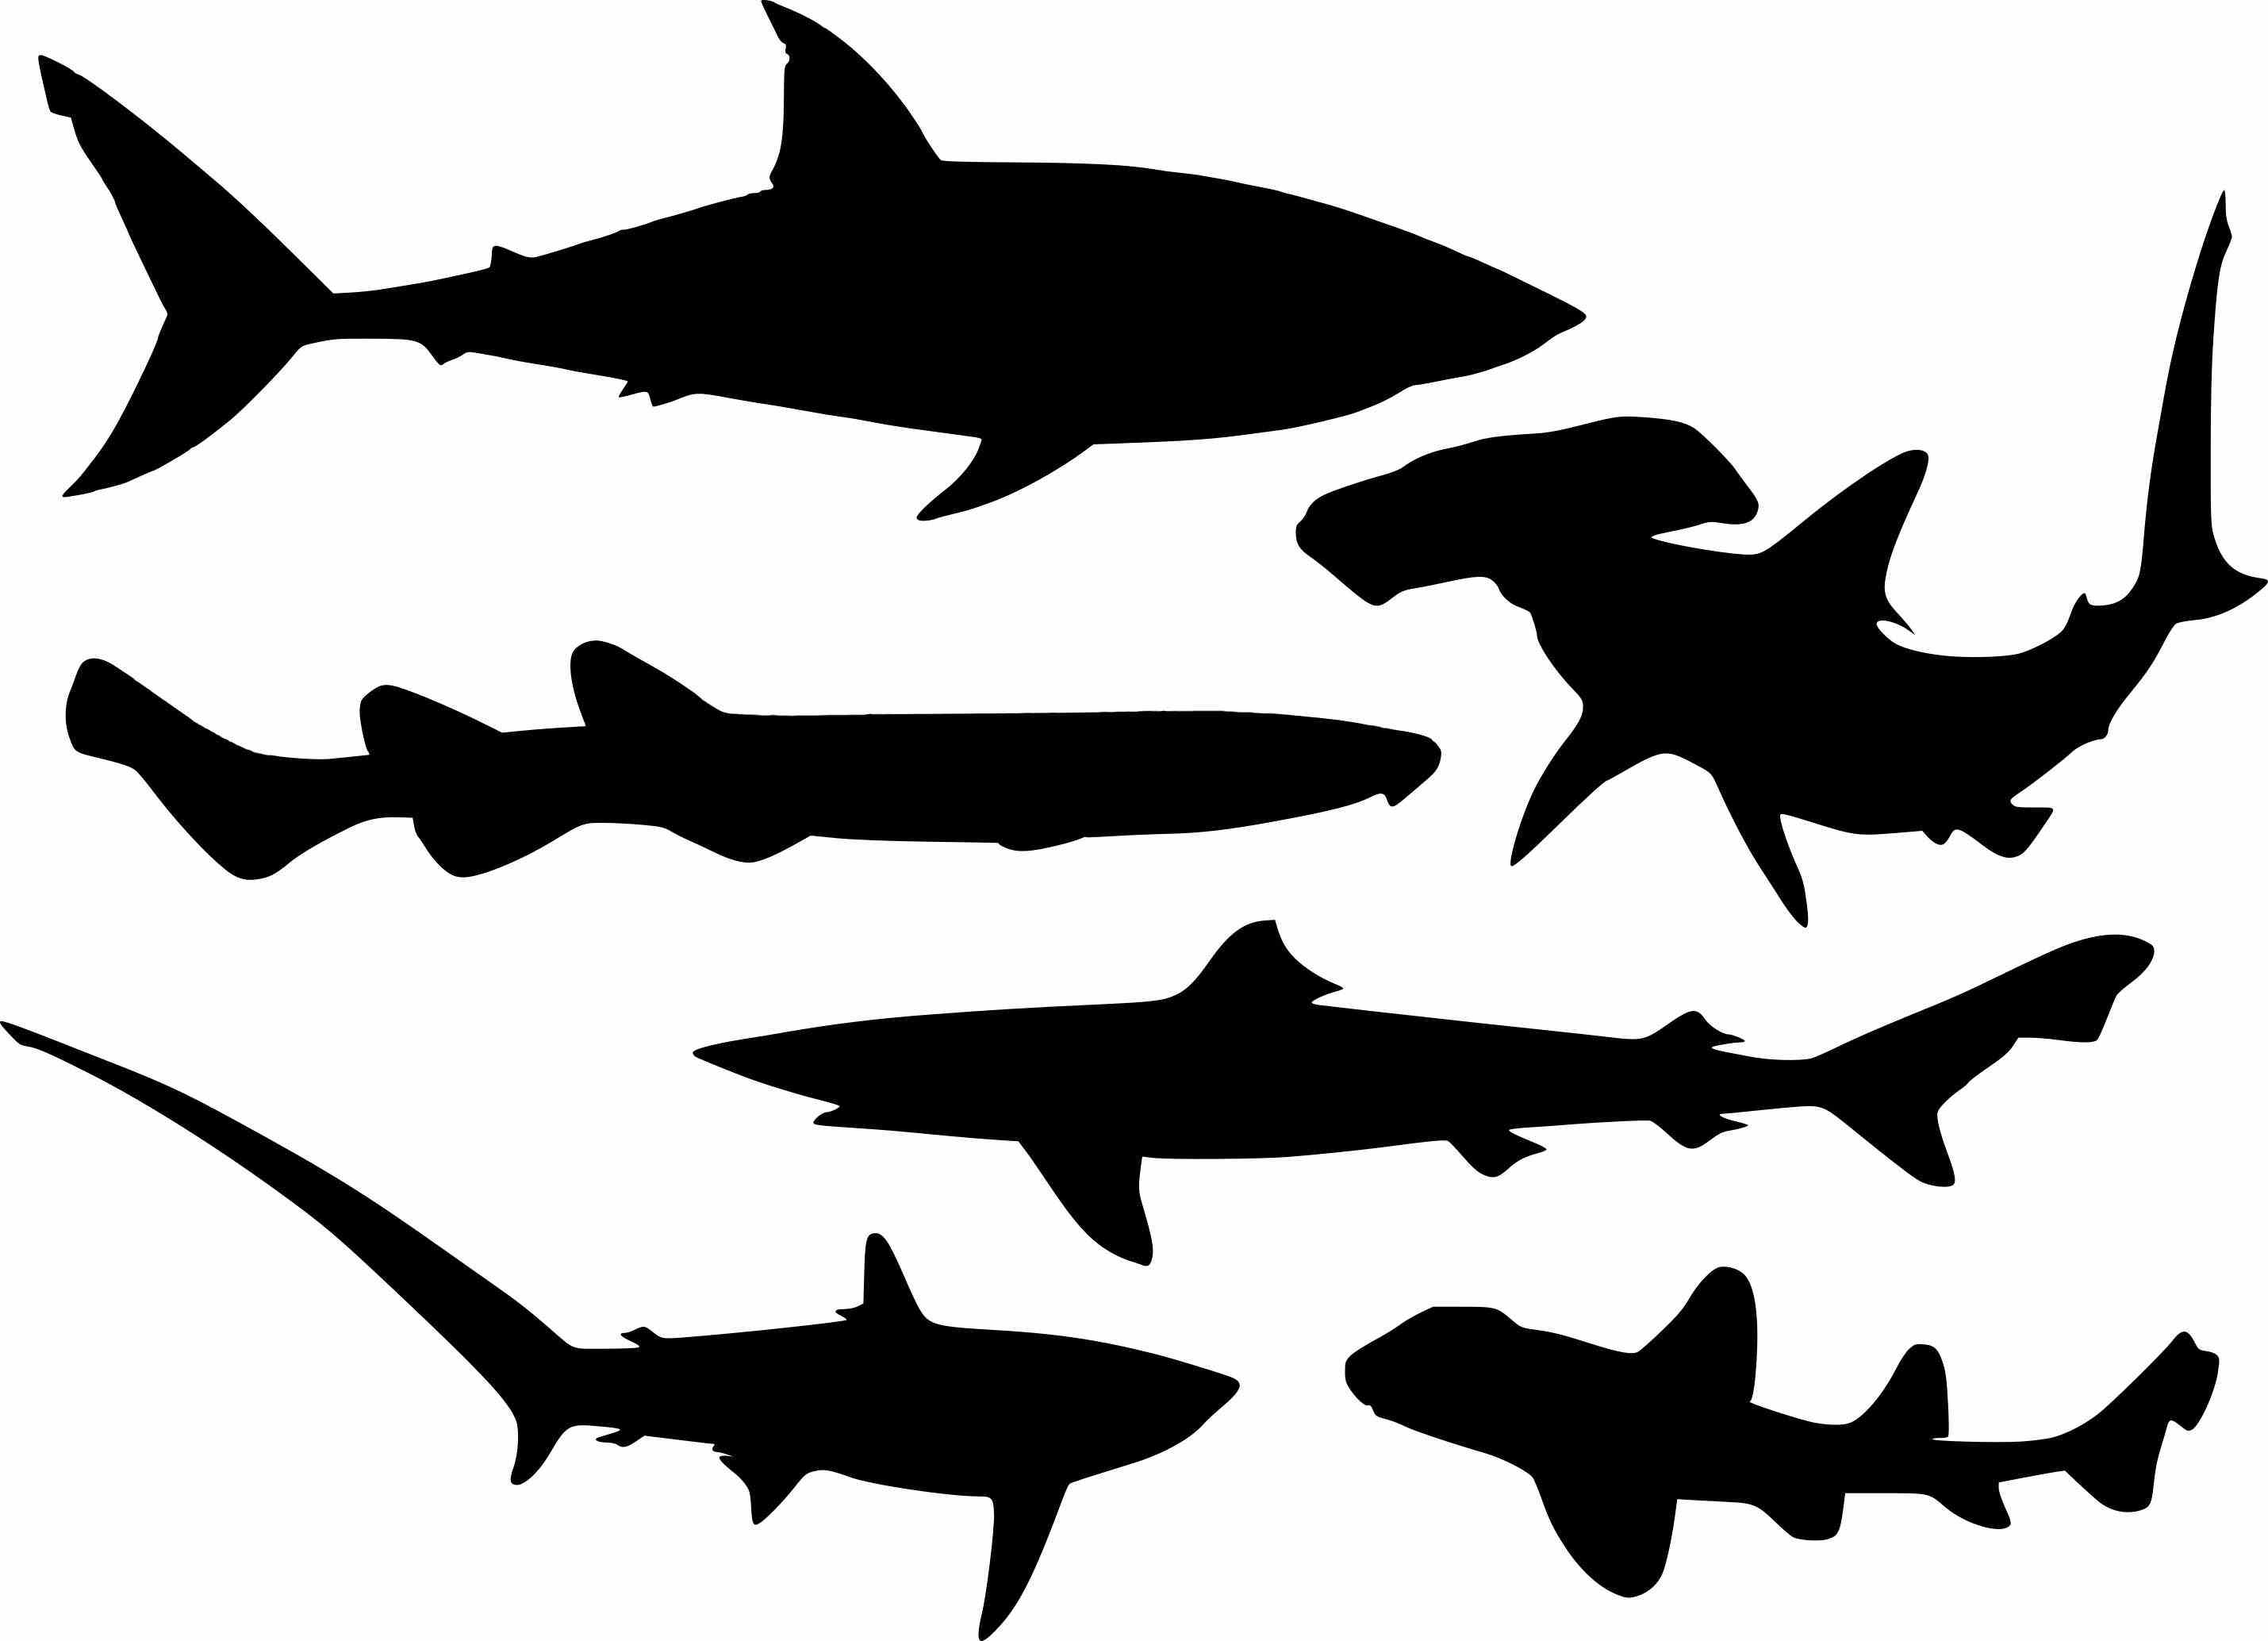 Shark diversity